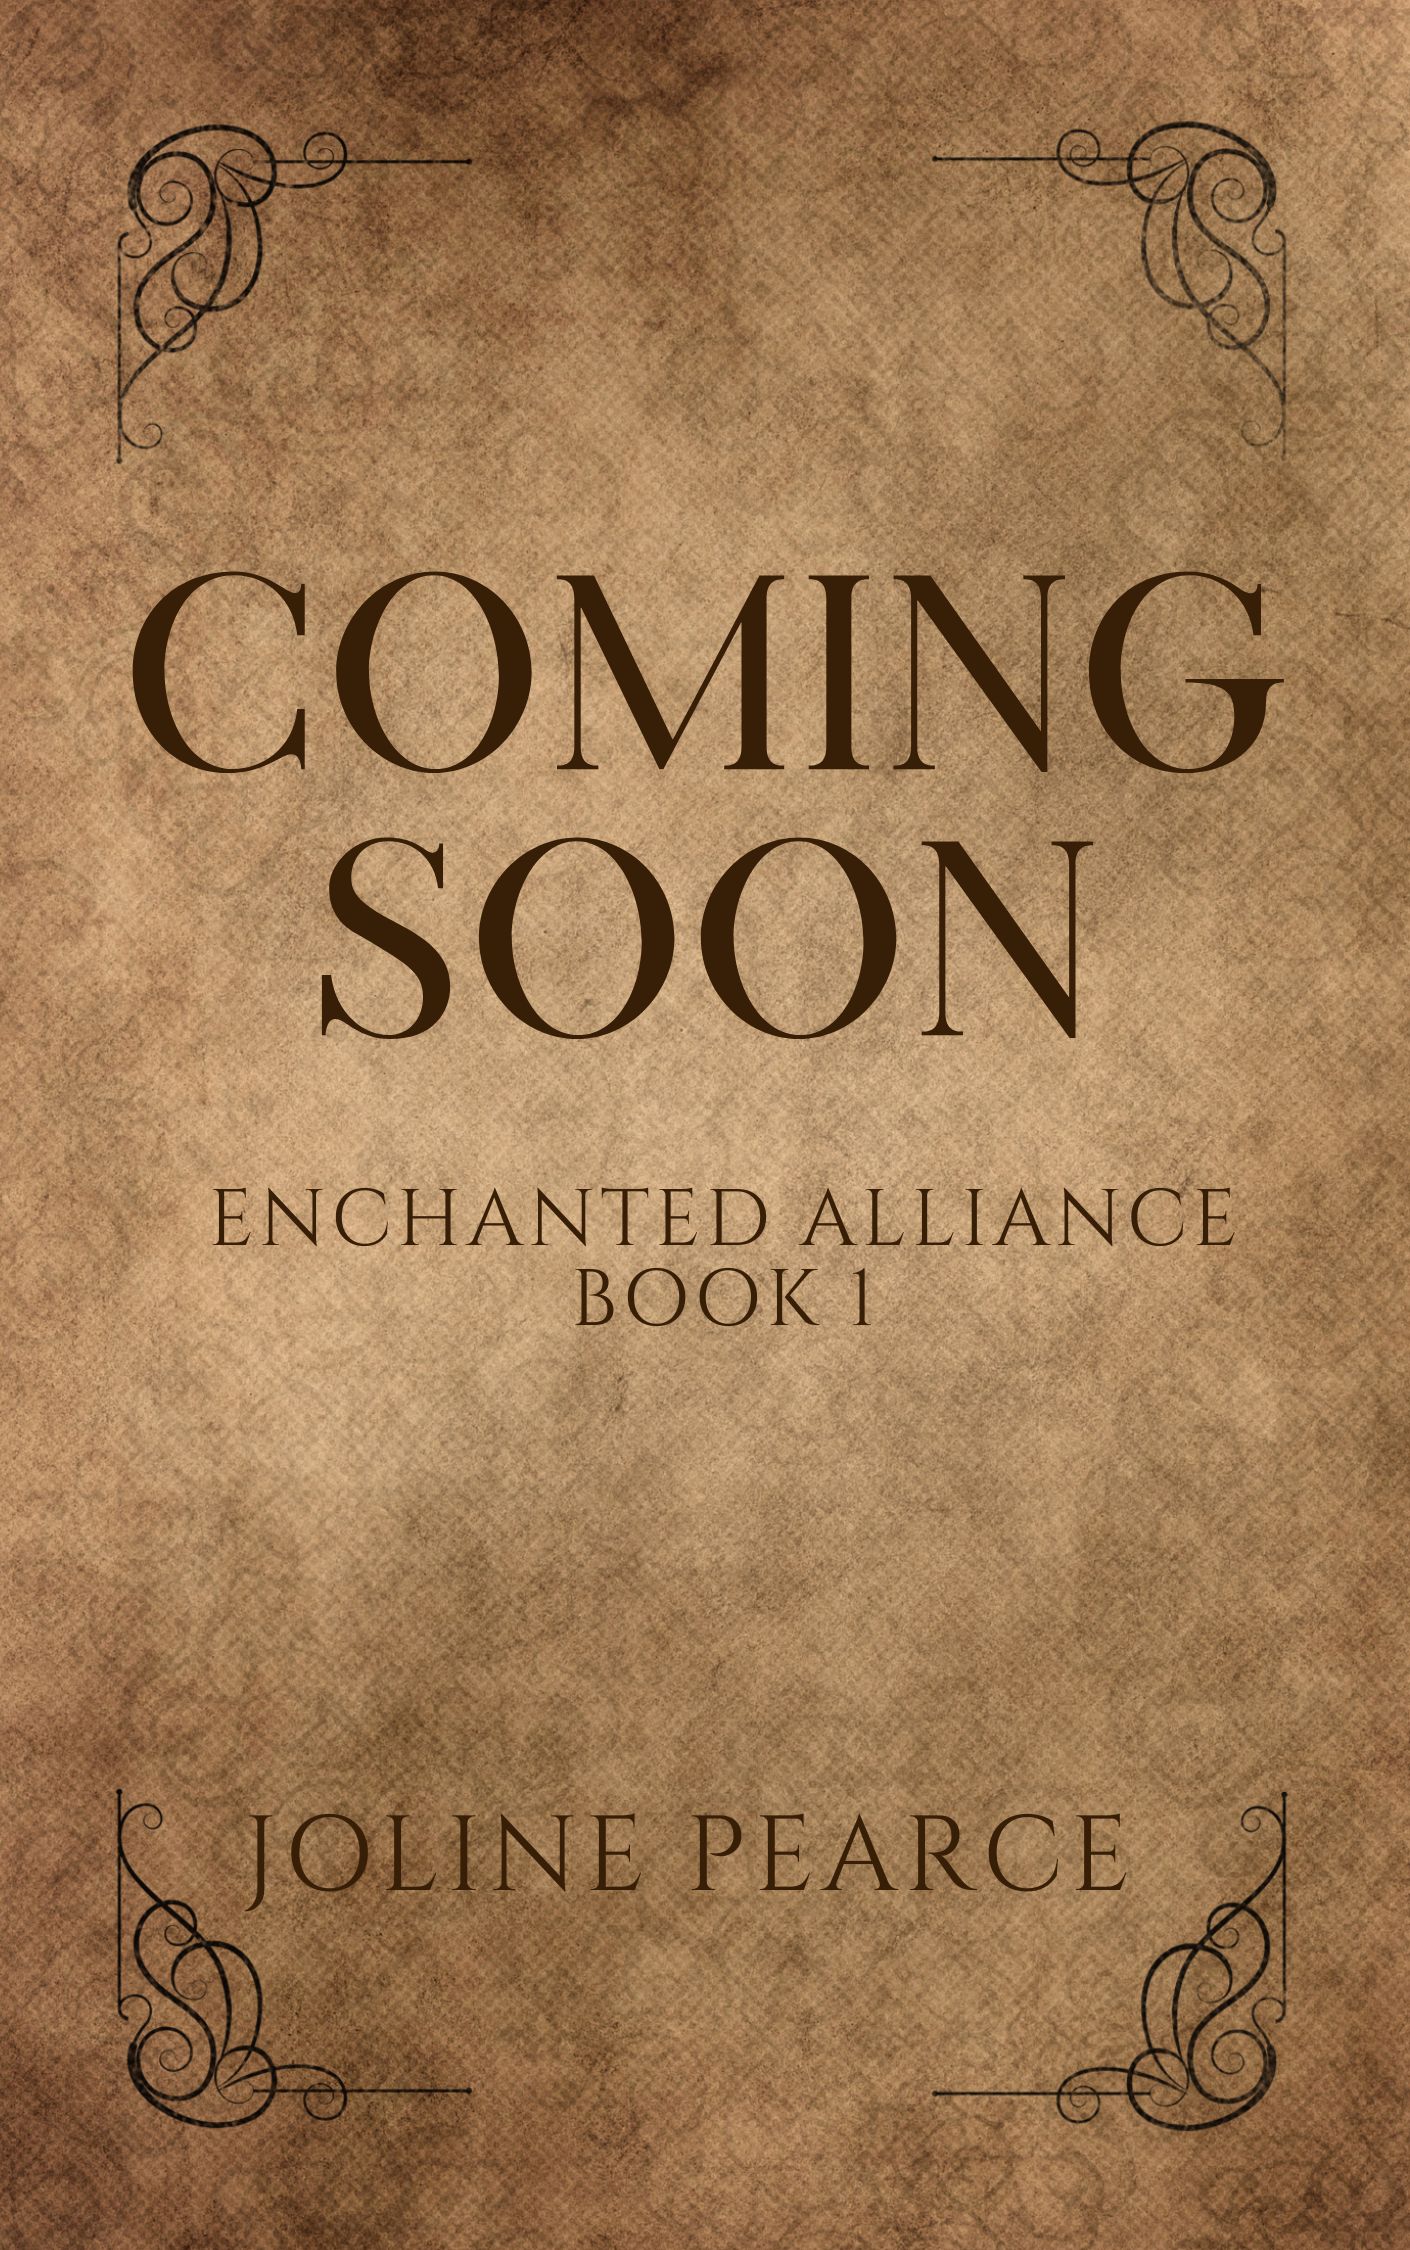 New Fantasy Romance series! Enchanted Alliance Book 1